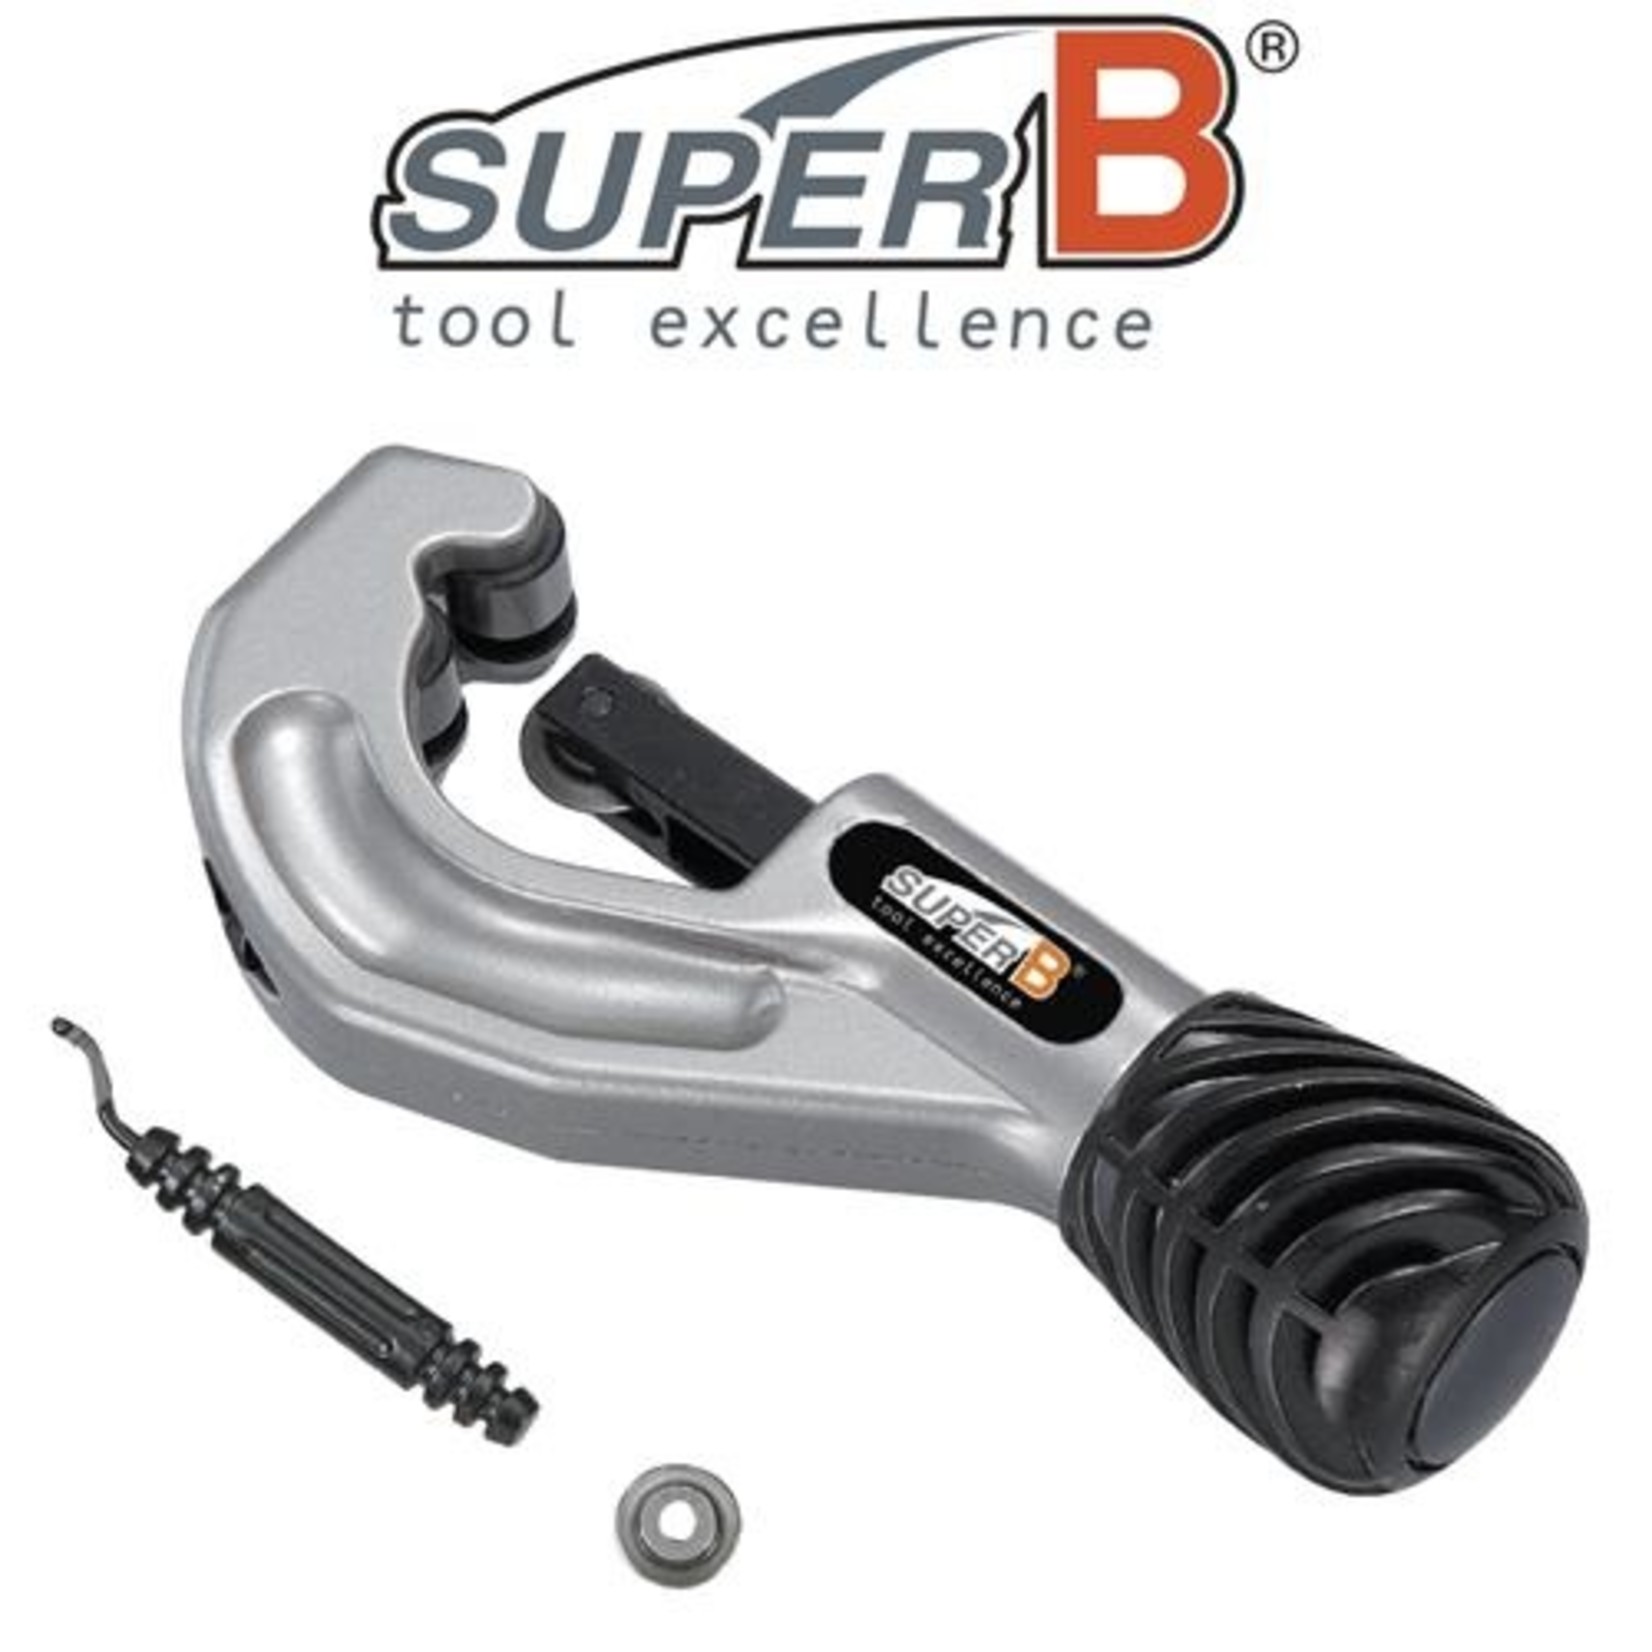 Super B SuperB Tube Cutter - Bike Tool For 6-38mm ( 1/4” – 1-1/2”) -TB1917